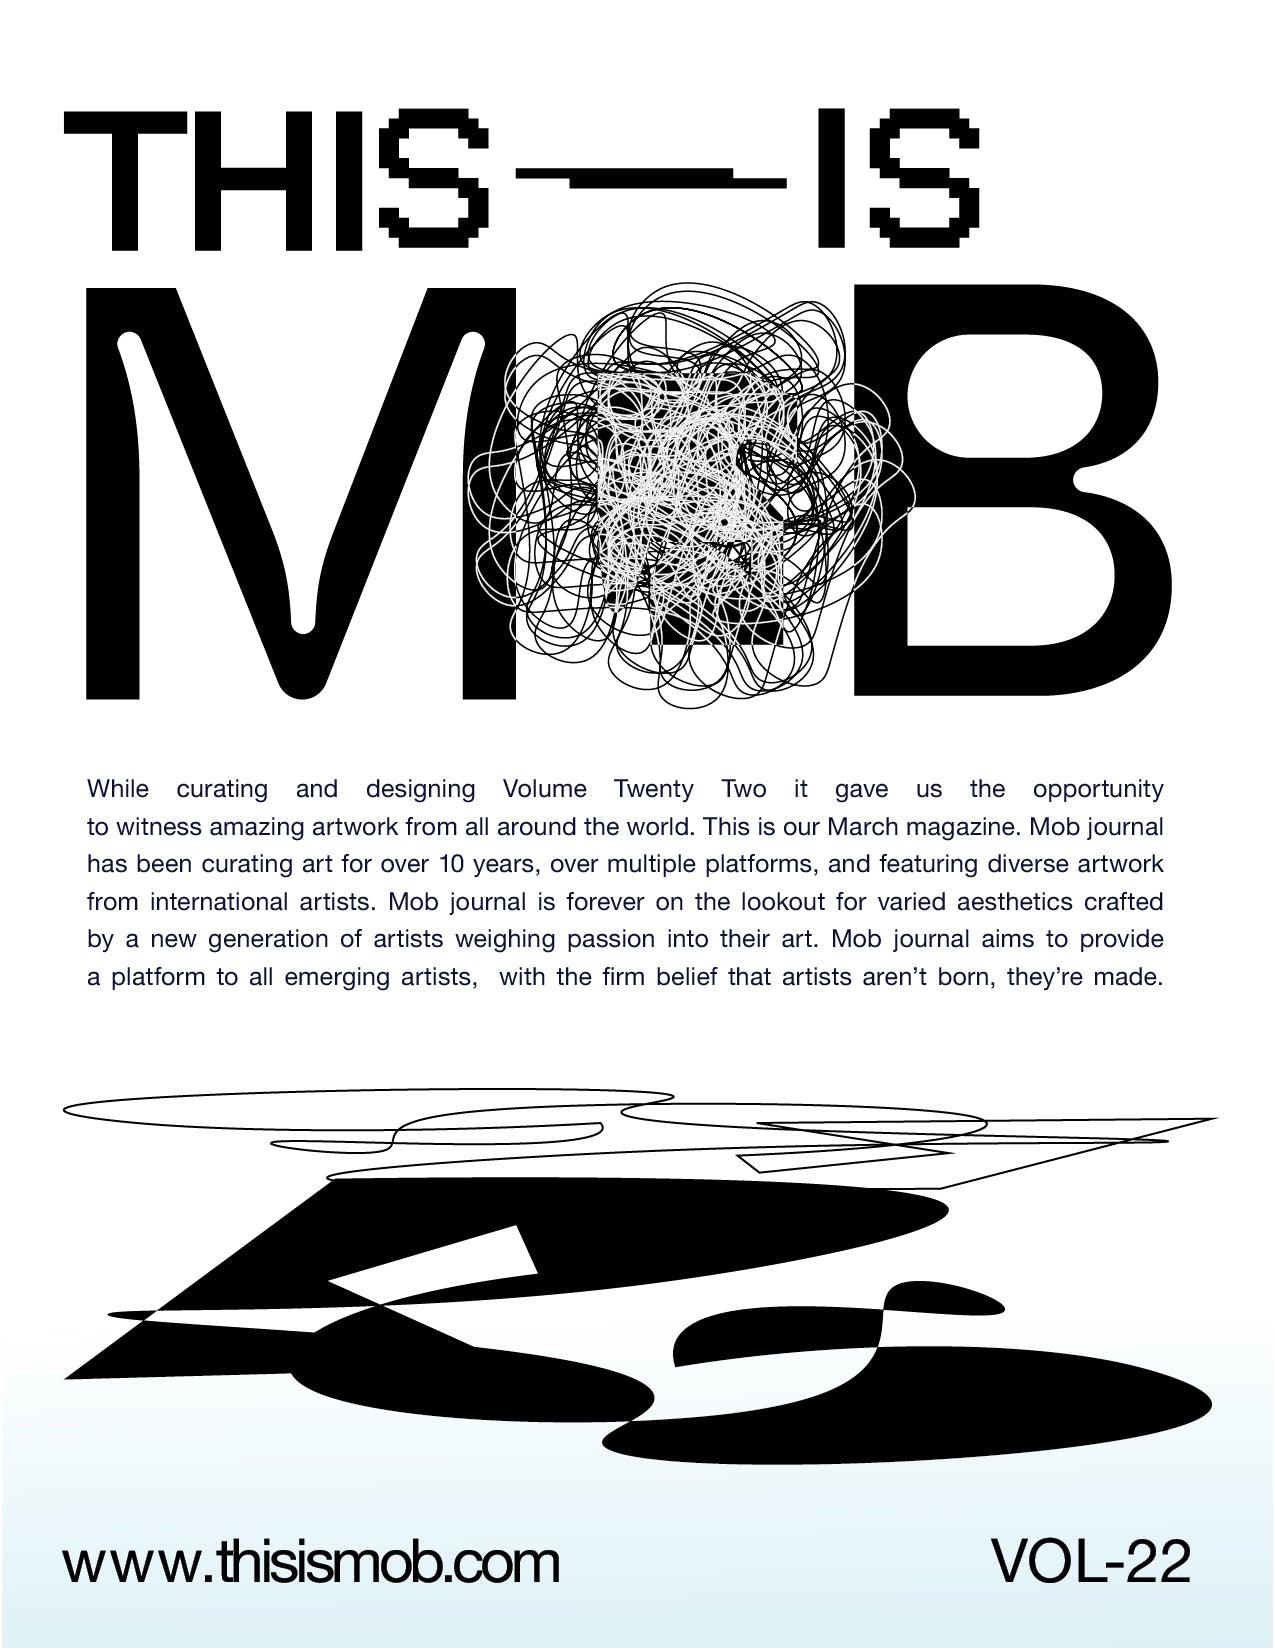 MOB JOURNAL | VOLUME TWENTY TWO | ISSUE #55 - Mob Journal